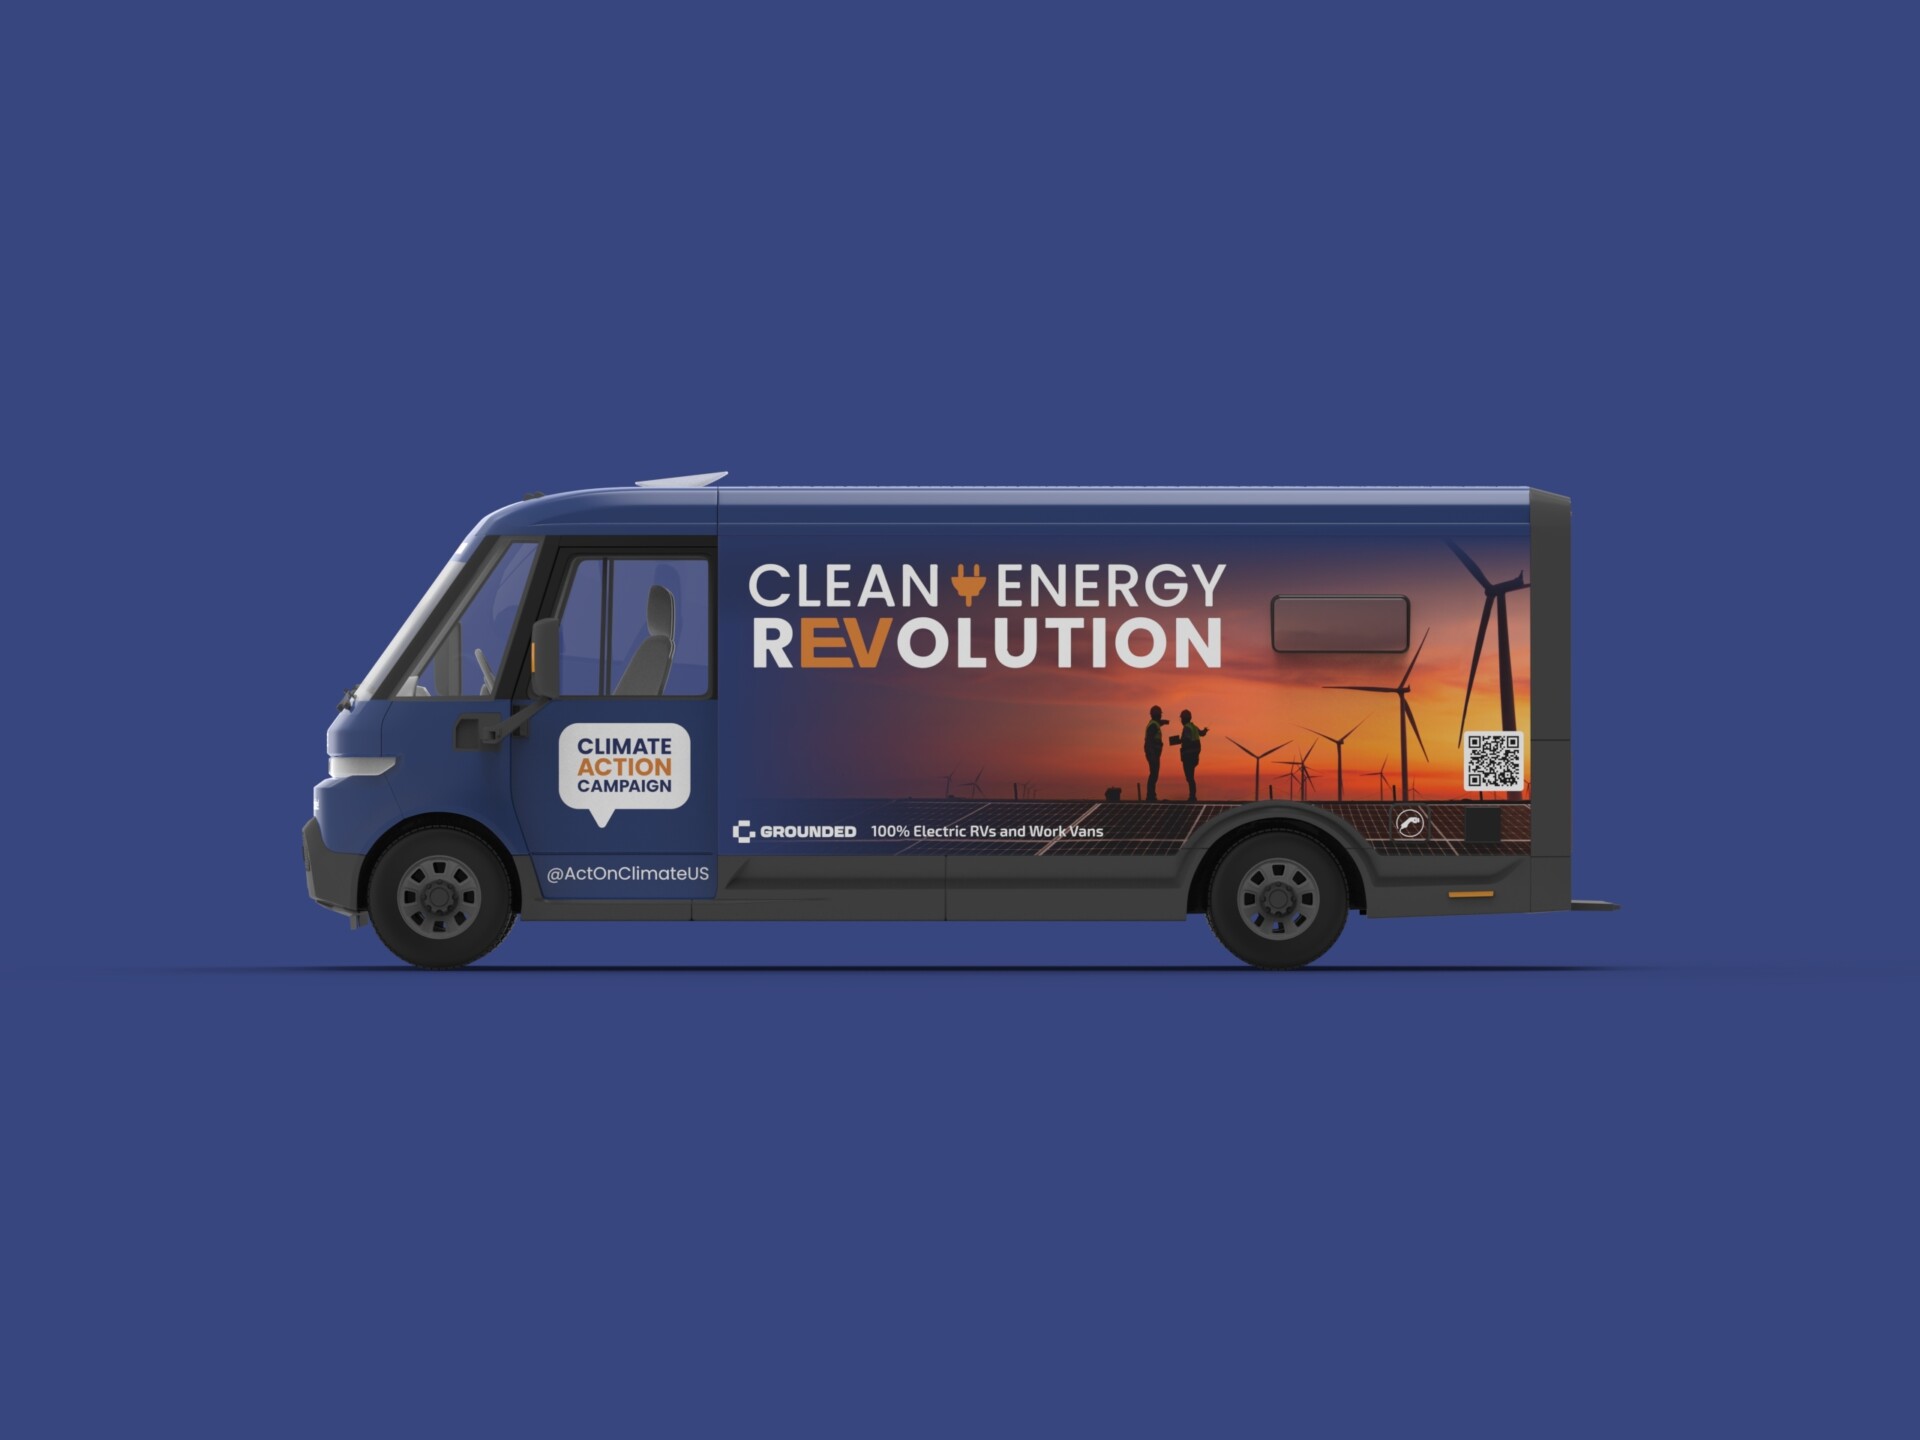 climate action campaign exterior wrap.2076